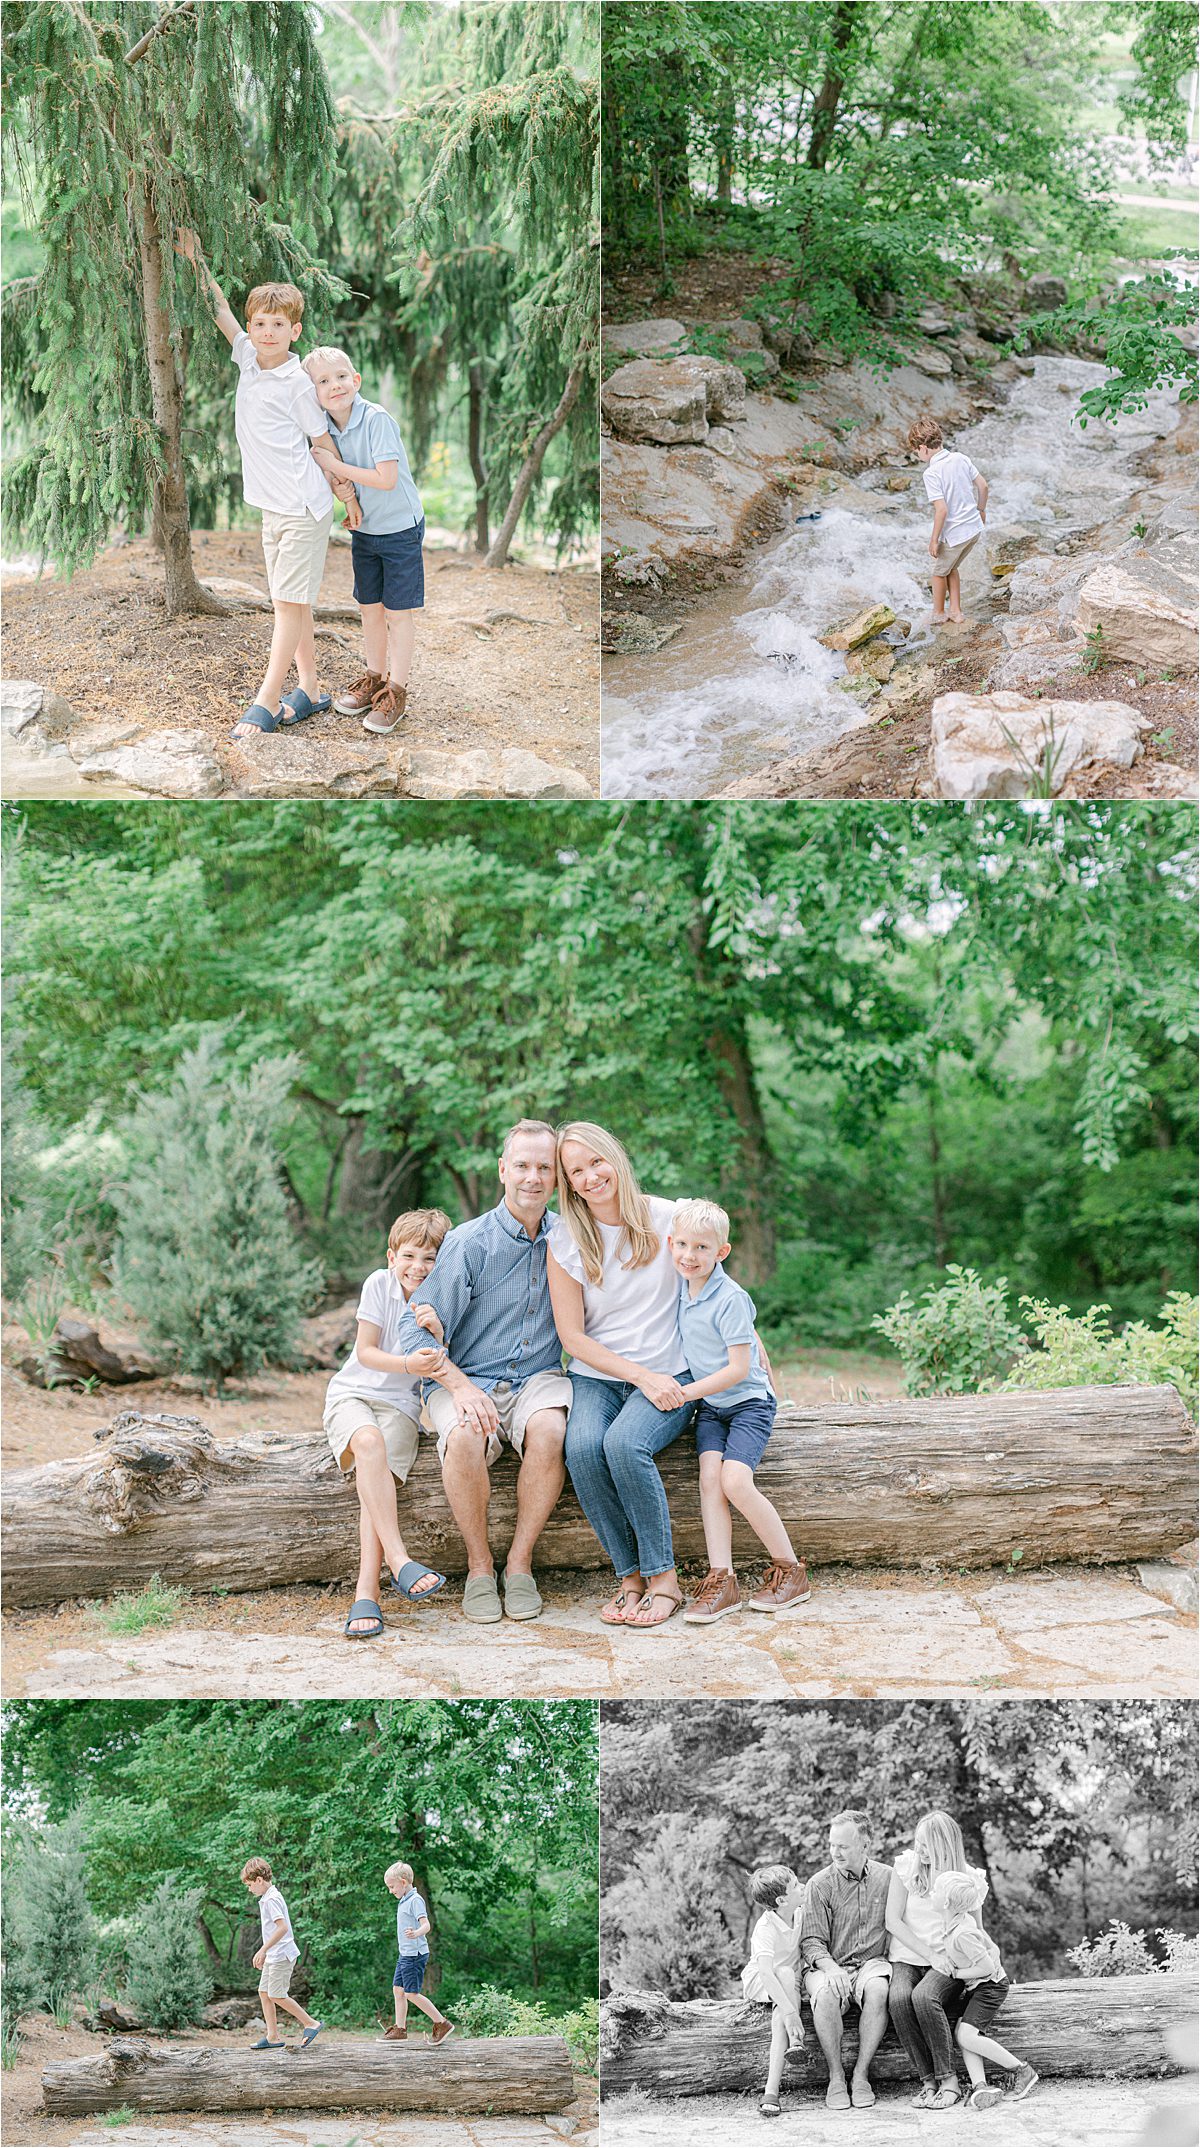 Summer family photos taken by St. Louis best family portrait photographers